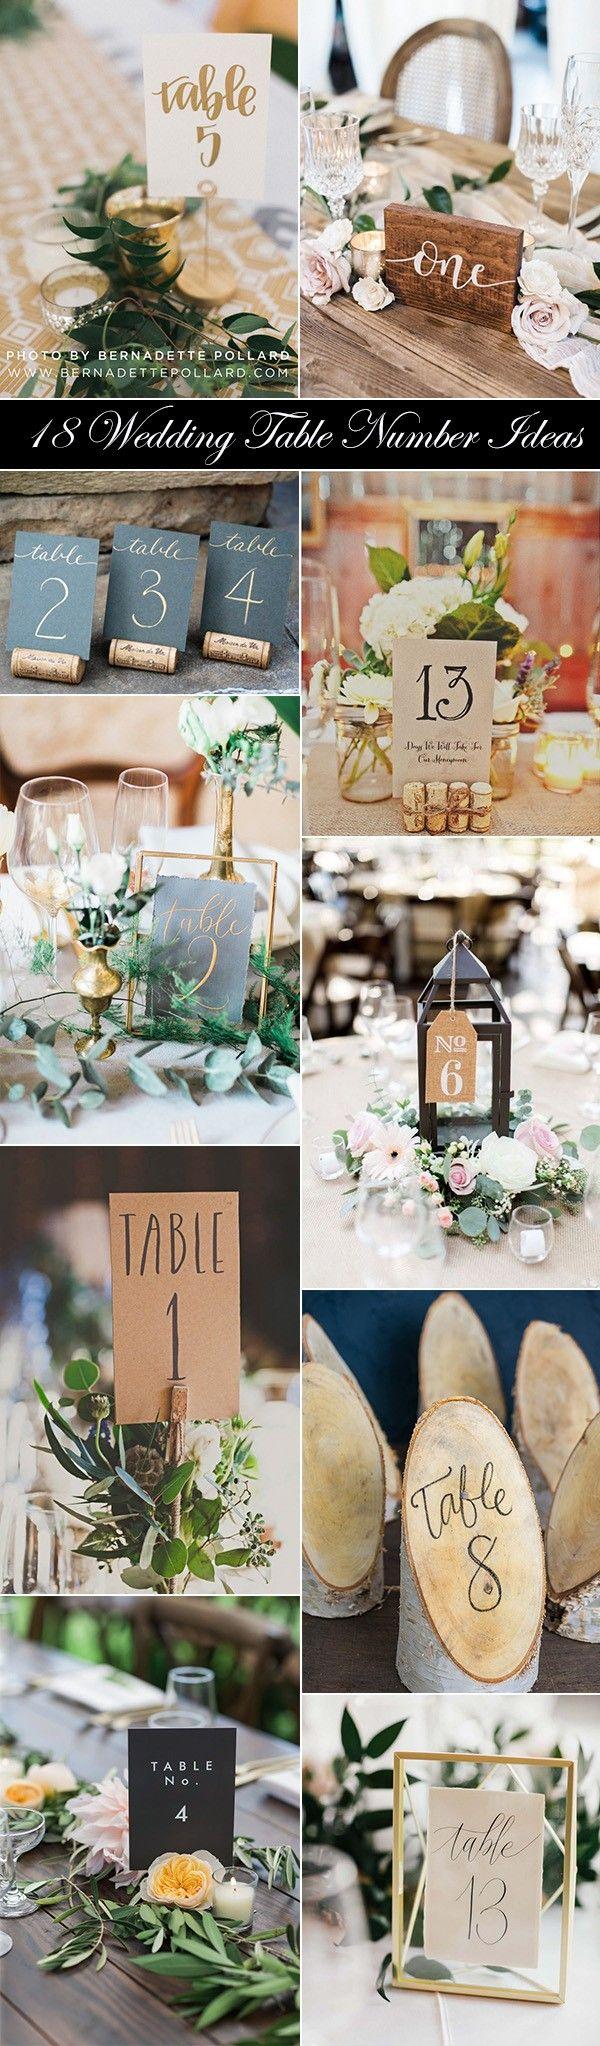 زفاف - 18 Inspiring Wedding Table Number Ideas To Love